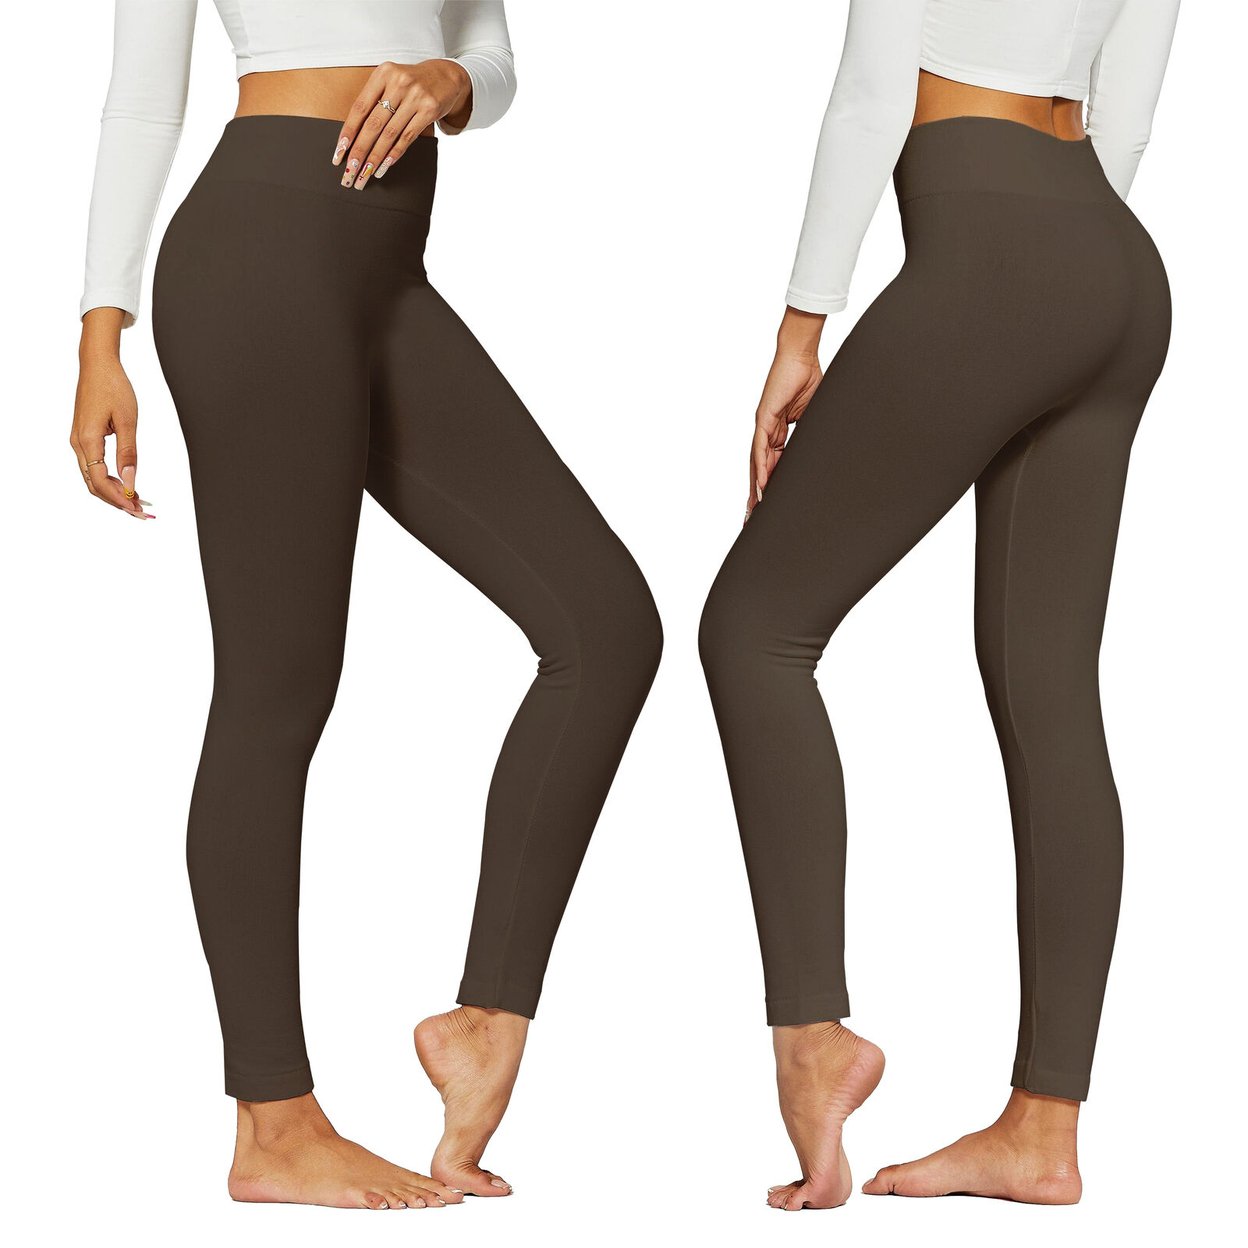 2-Pack: Women's Winter Warm High-Waist Soft Fleece Lined Leggings - Black & Grey, 3X